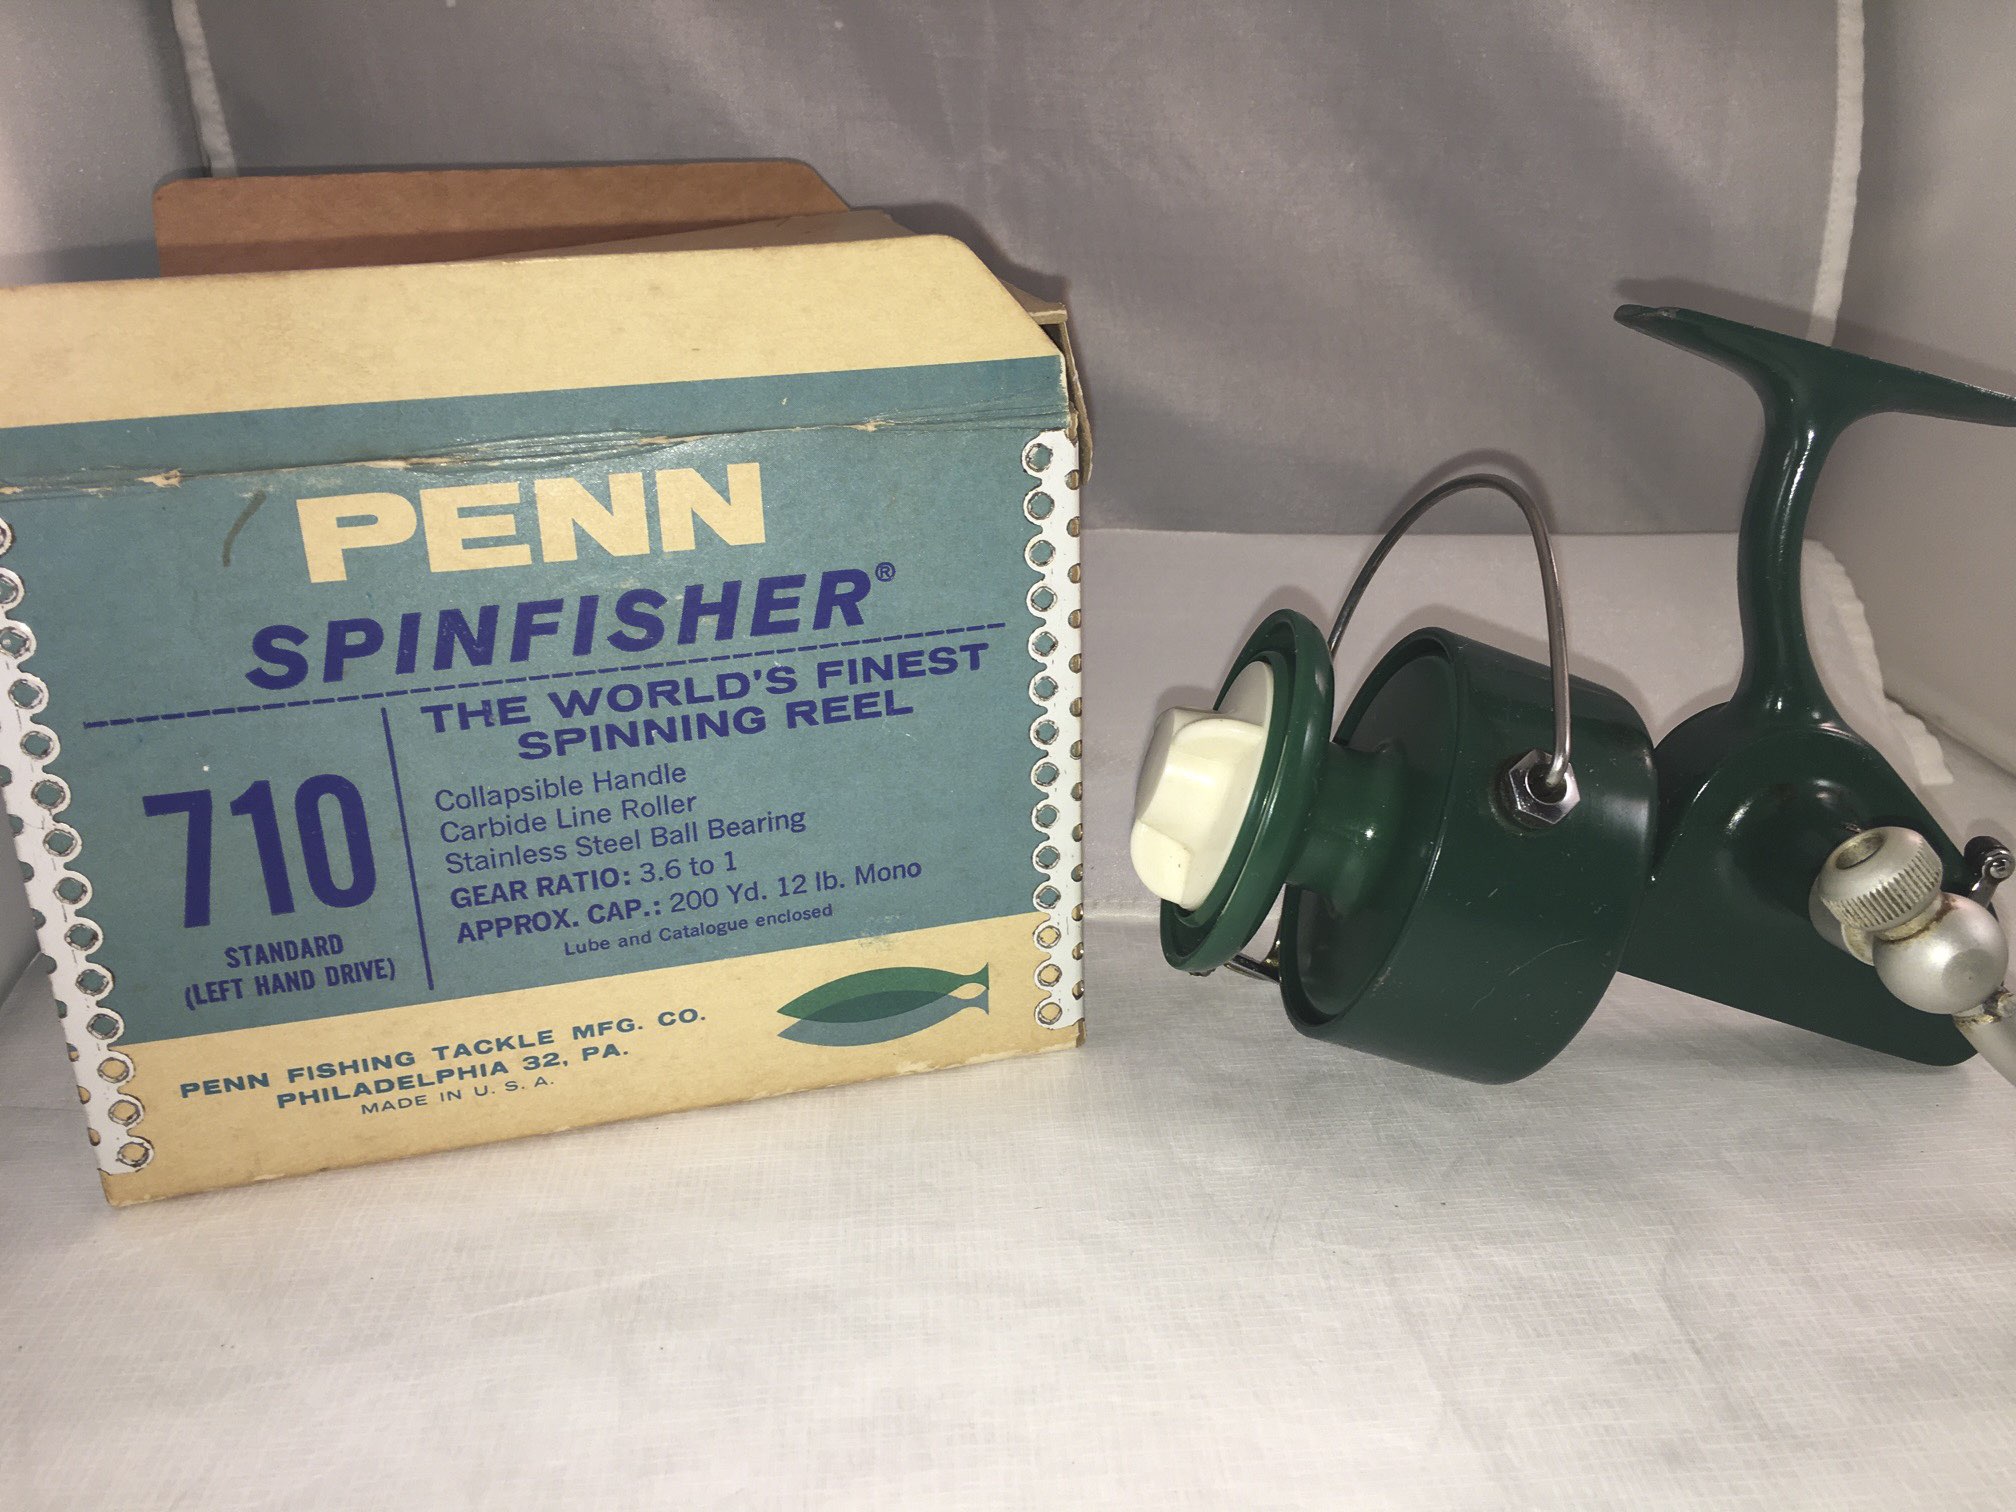 Penn Spinfisher 710 Spinning Reel in Box